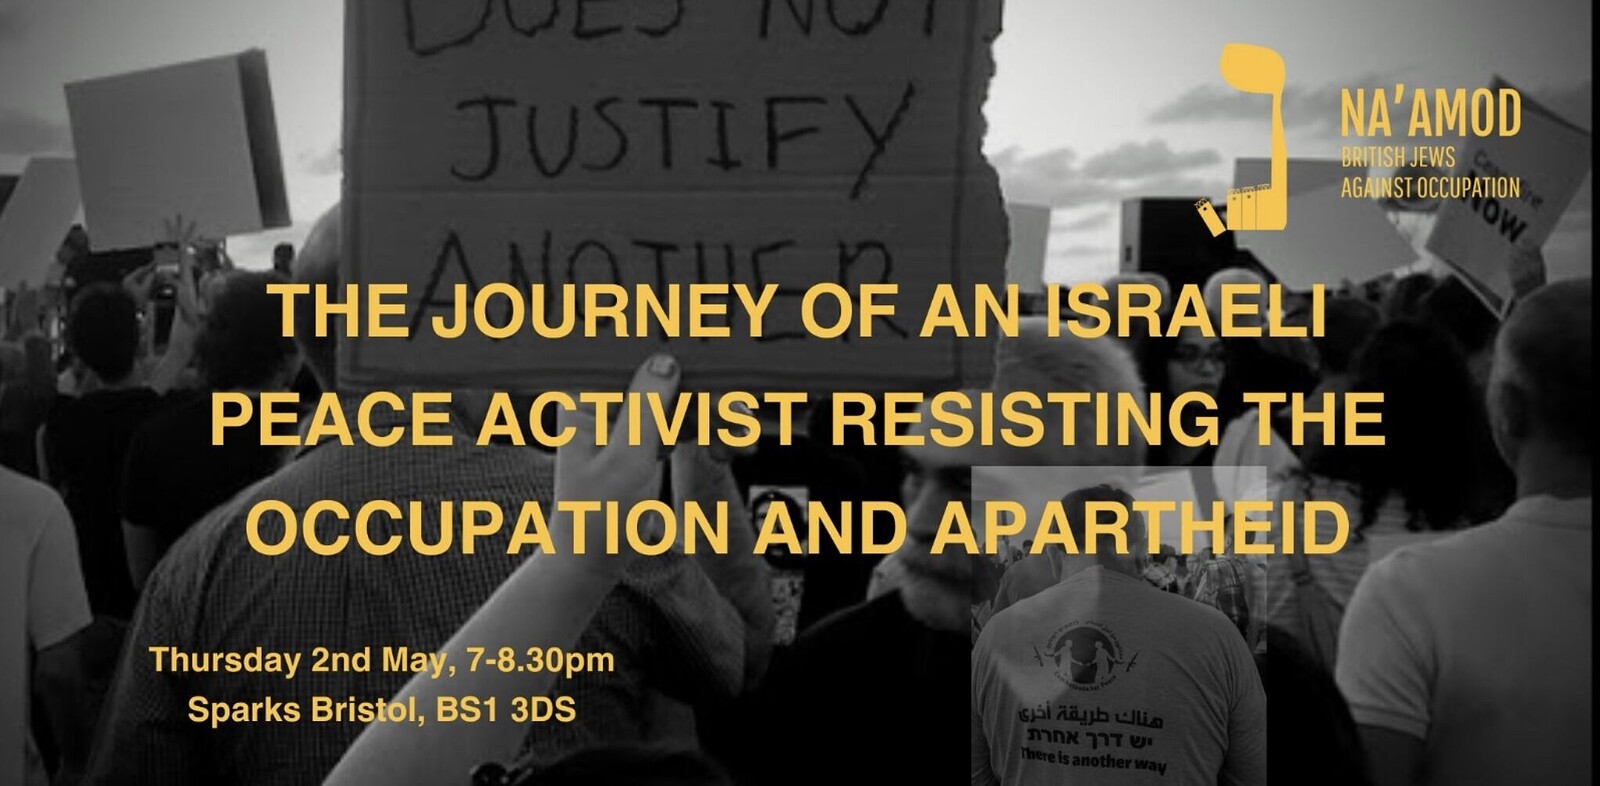 Palestine: An Israeli peace activist's journey at Sparks Bristol